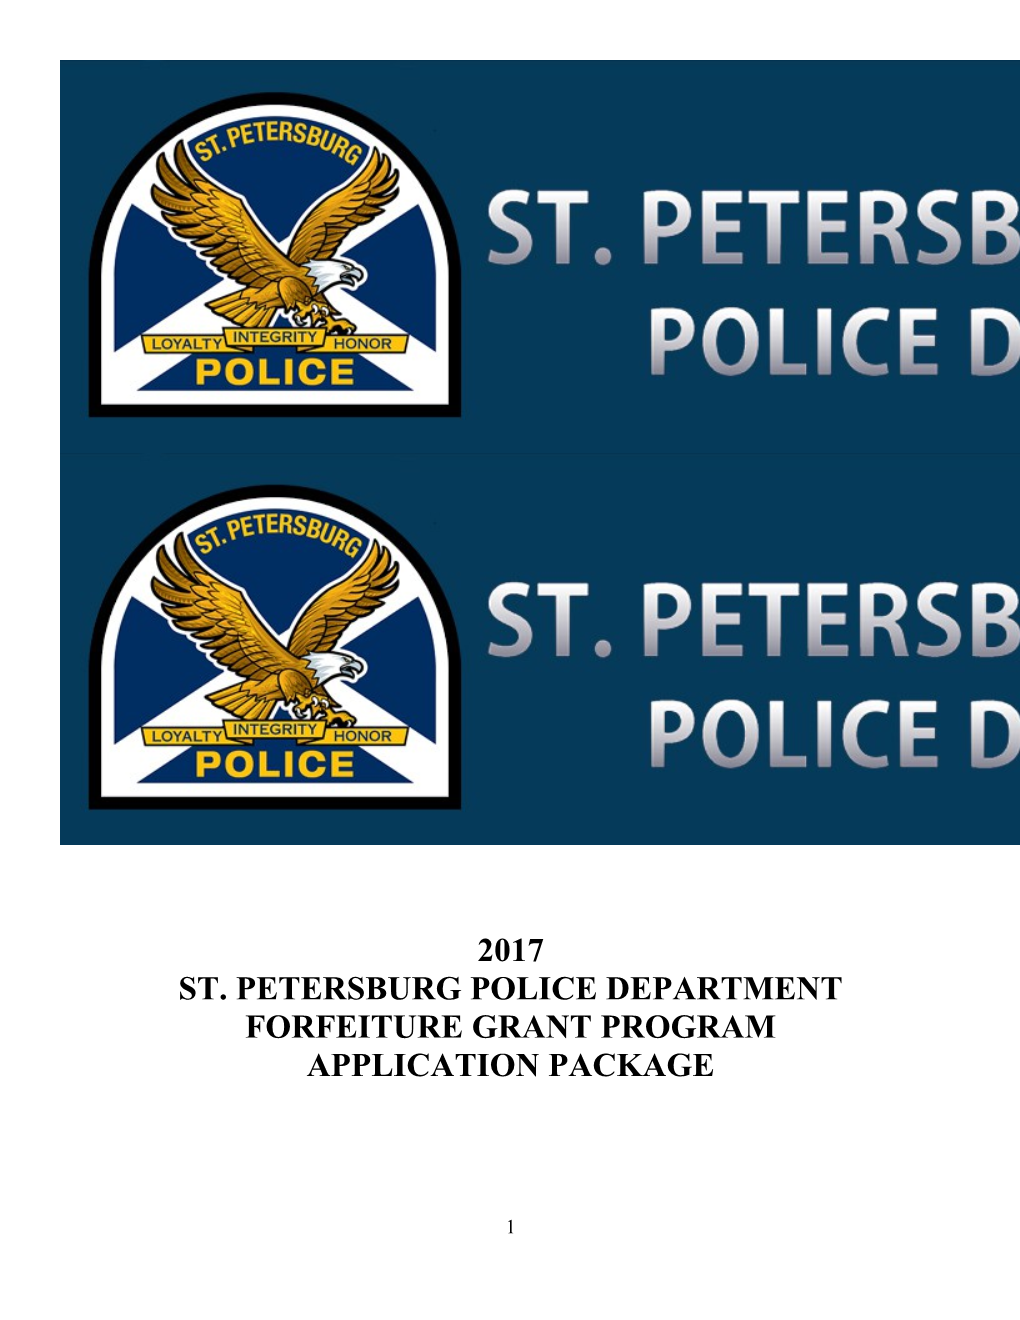 St. Petersburg Police Department